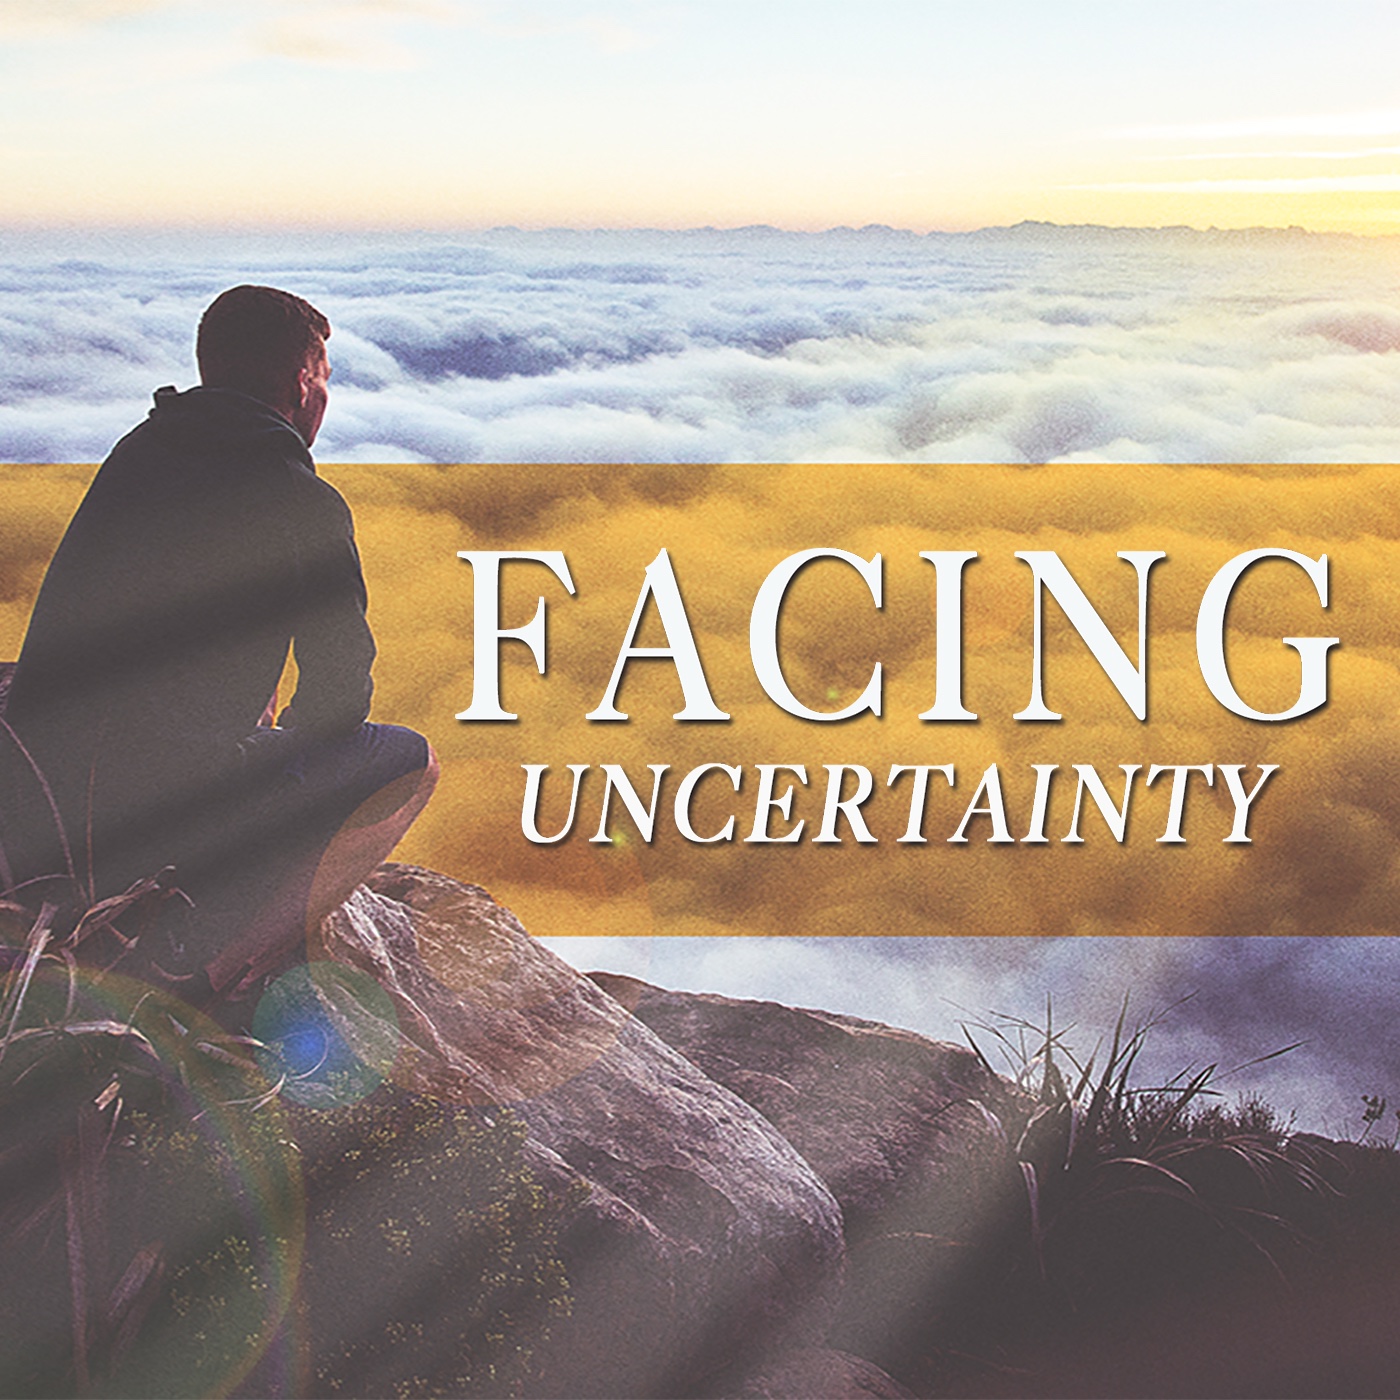 Facing Uncertainty